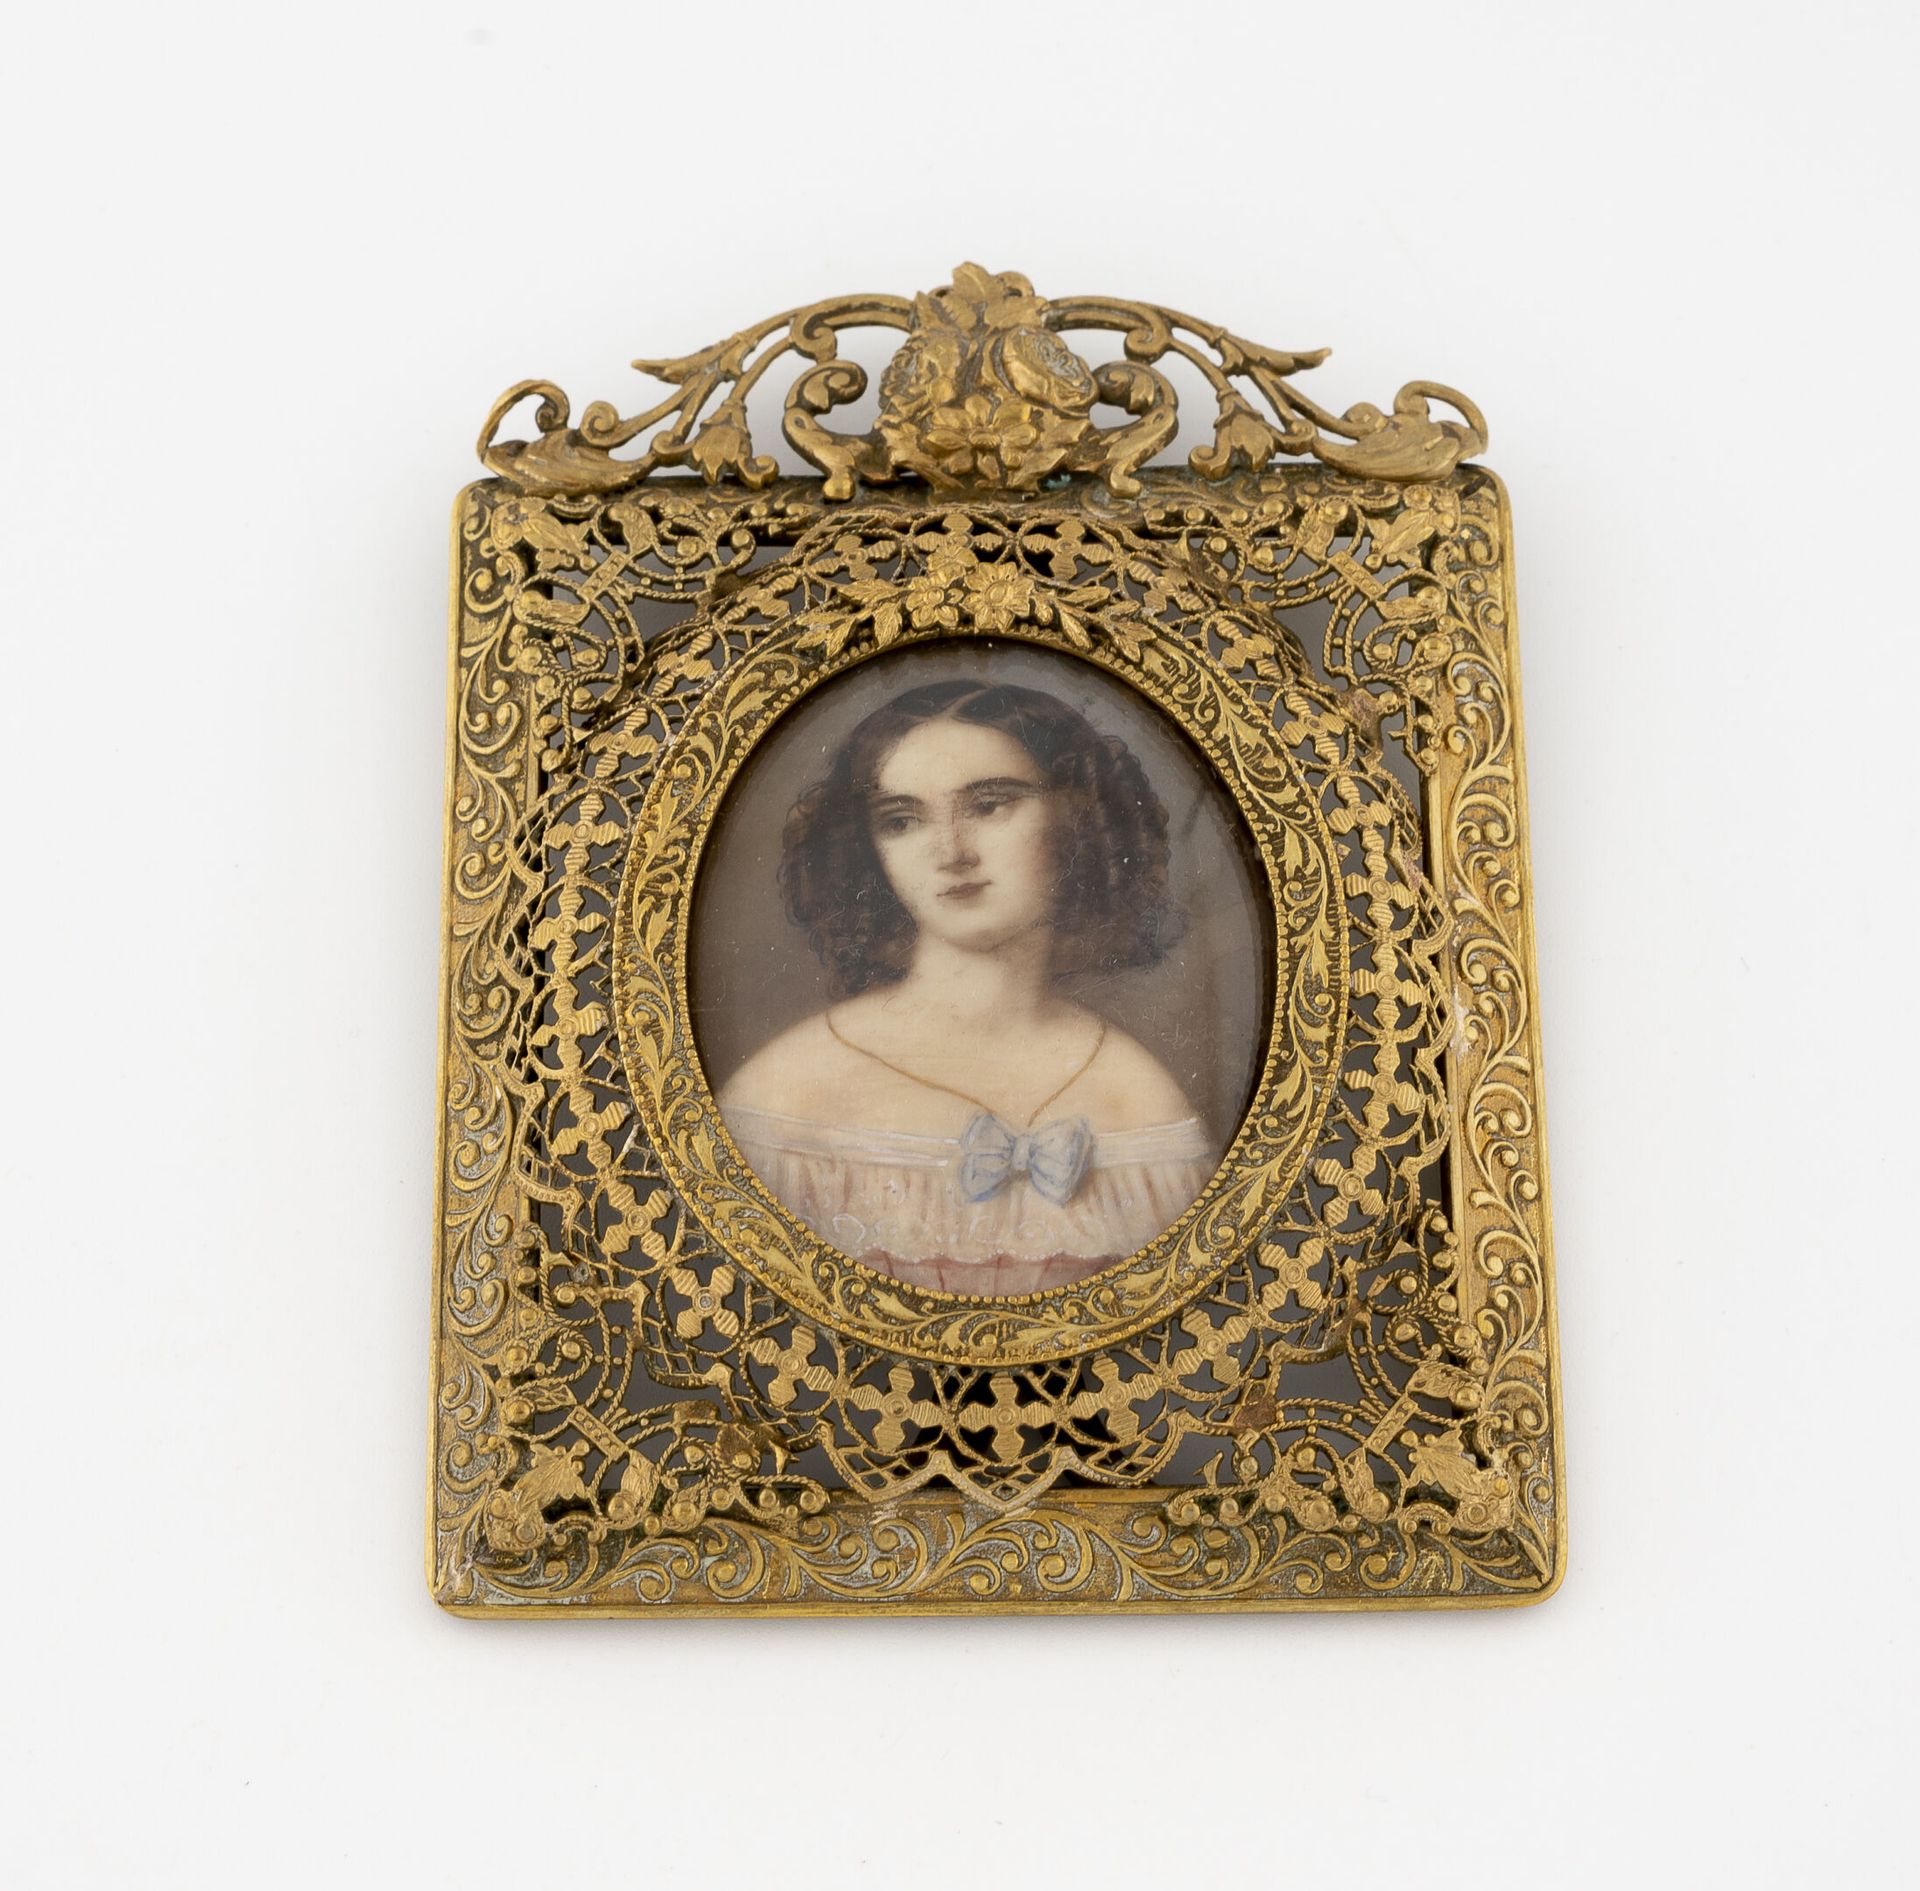 Ecole du XIXème siècle 穿着英式礼服和粉色连衣裙的年轻女子肖像。

椭圆形水粉画微型画。

签名的痕迹在右边的底部。

5 x 4厘米。
&hellip;